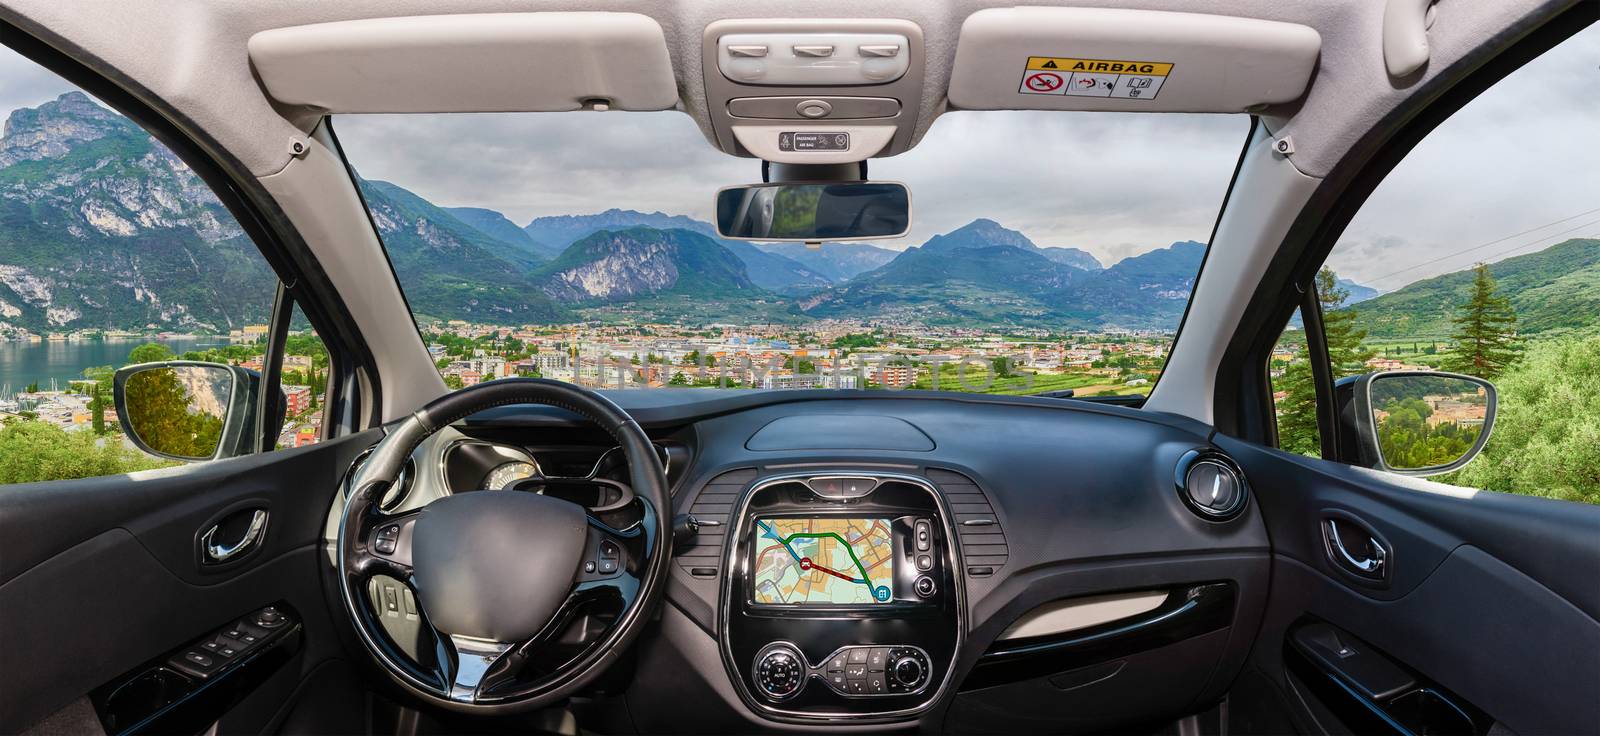 Car windshield view of Riva del Garda, Lake Garda, Italy by marcorubino